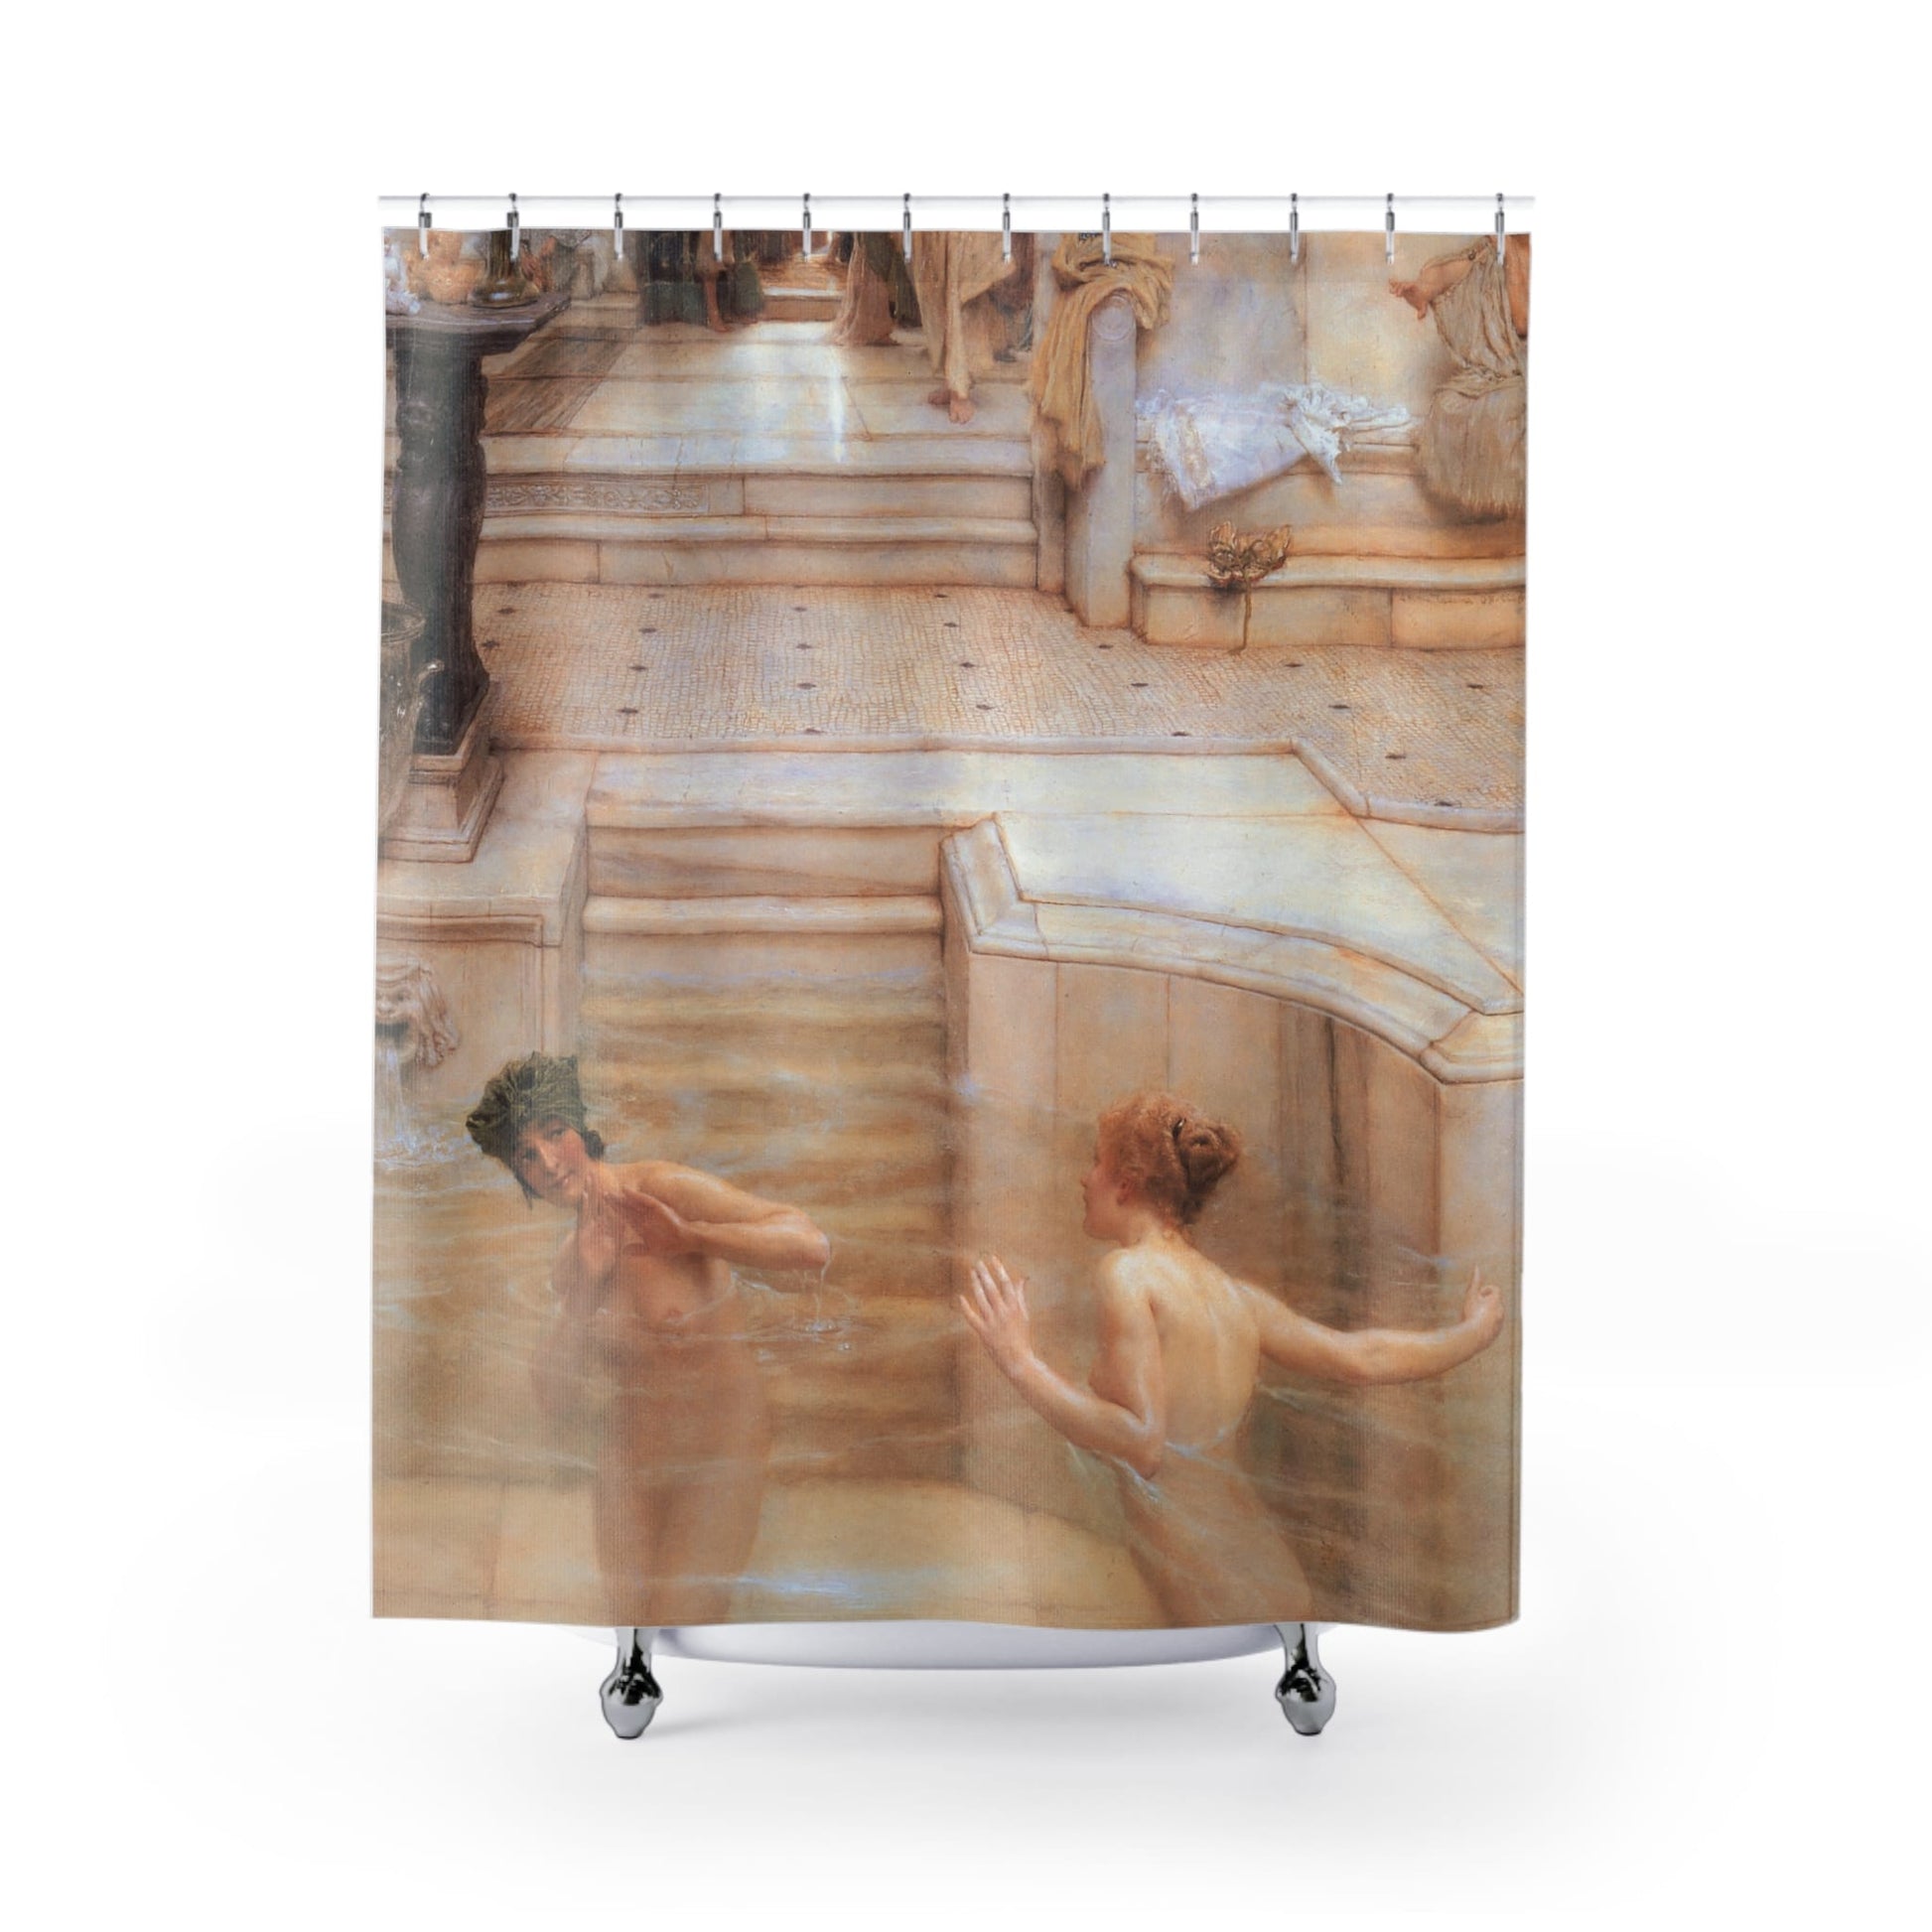 Women Bathing Shower Curtain with Victorian era design, classic bathroom decor showcasing historical bathing scenes.